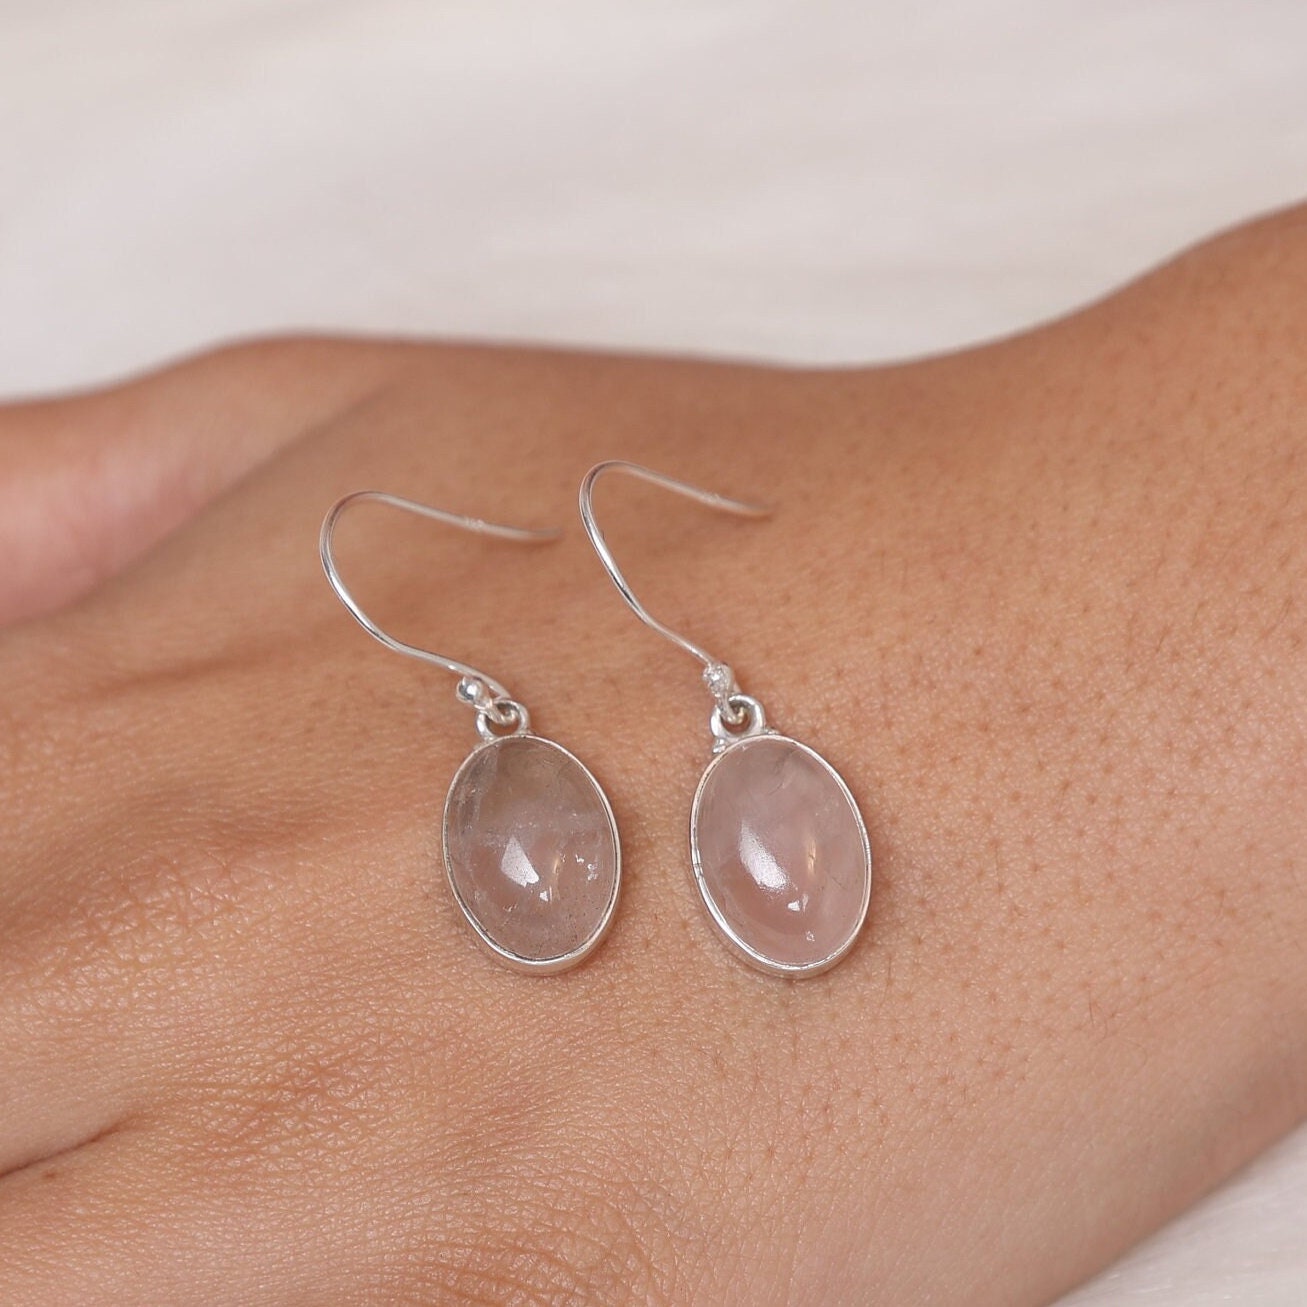 Rose Quartz Earrings, 925 Sterling Silver Earrings, Oval Gemstone Earrings, Dangle Drop Earrings, Handmade Jewelry, Birthday Gift for Her